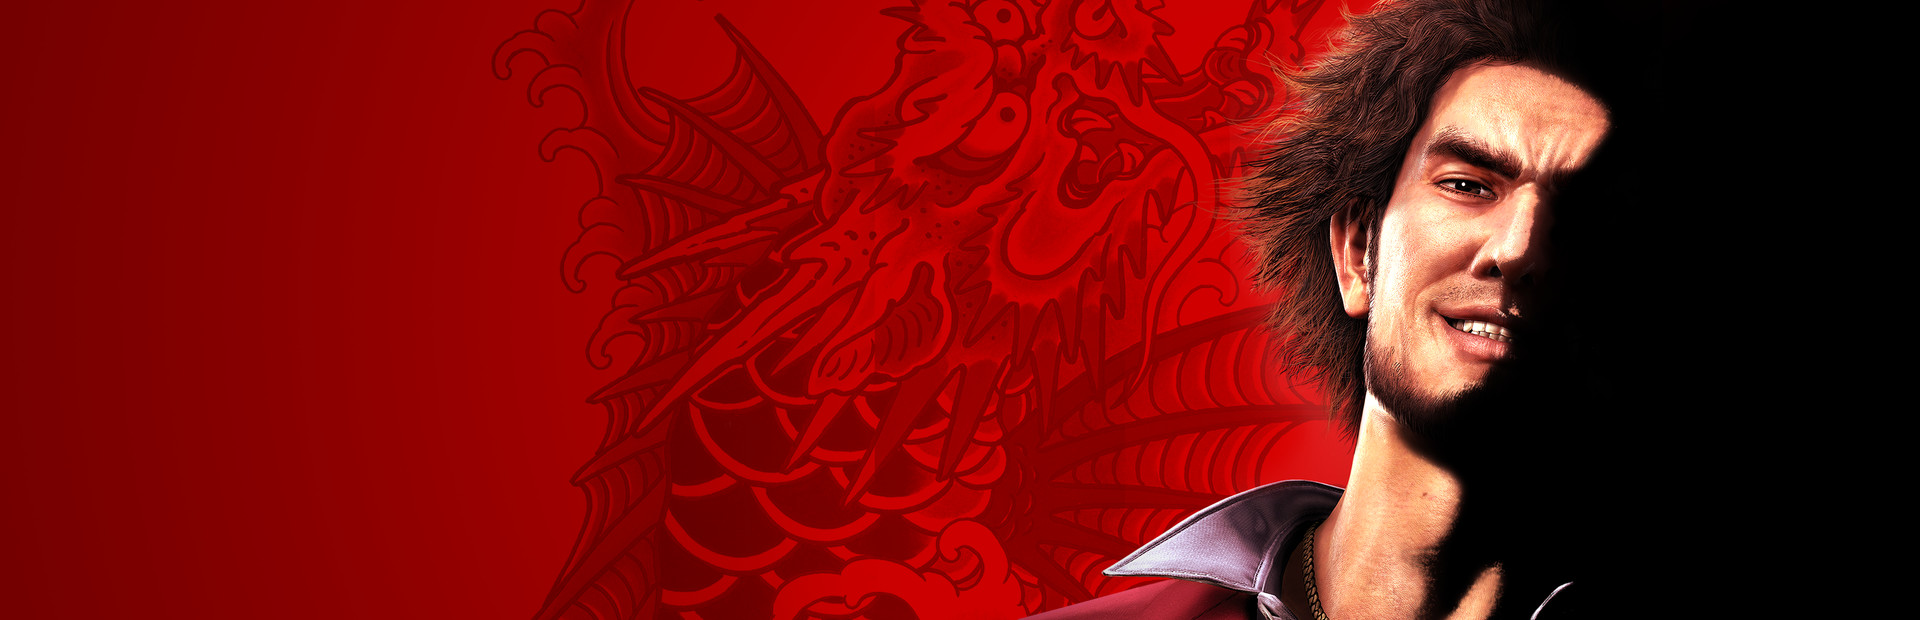 Yakuza: Like a Dragon cover image